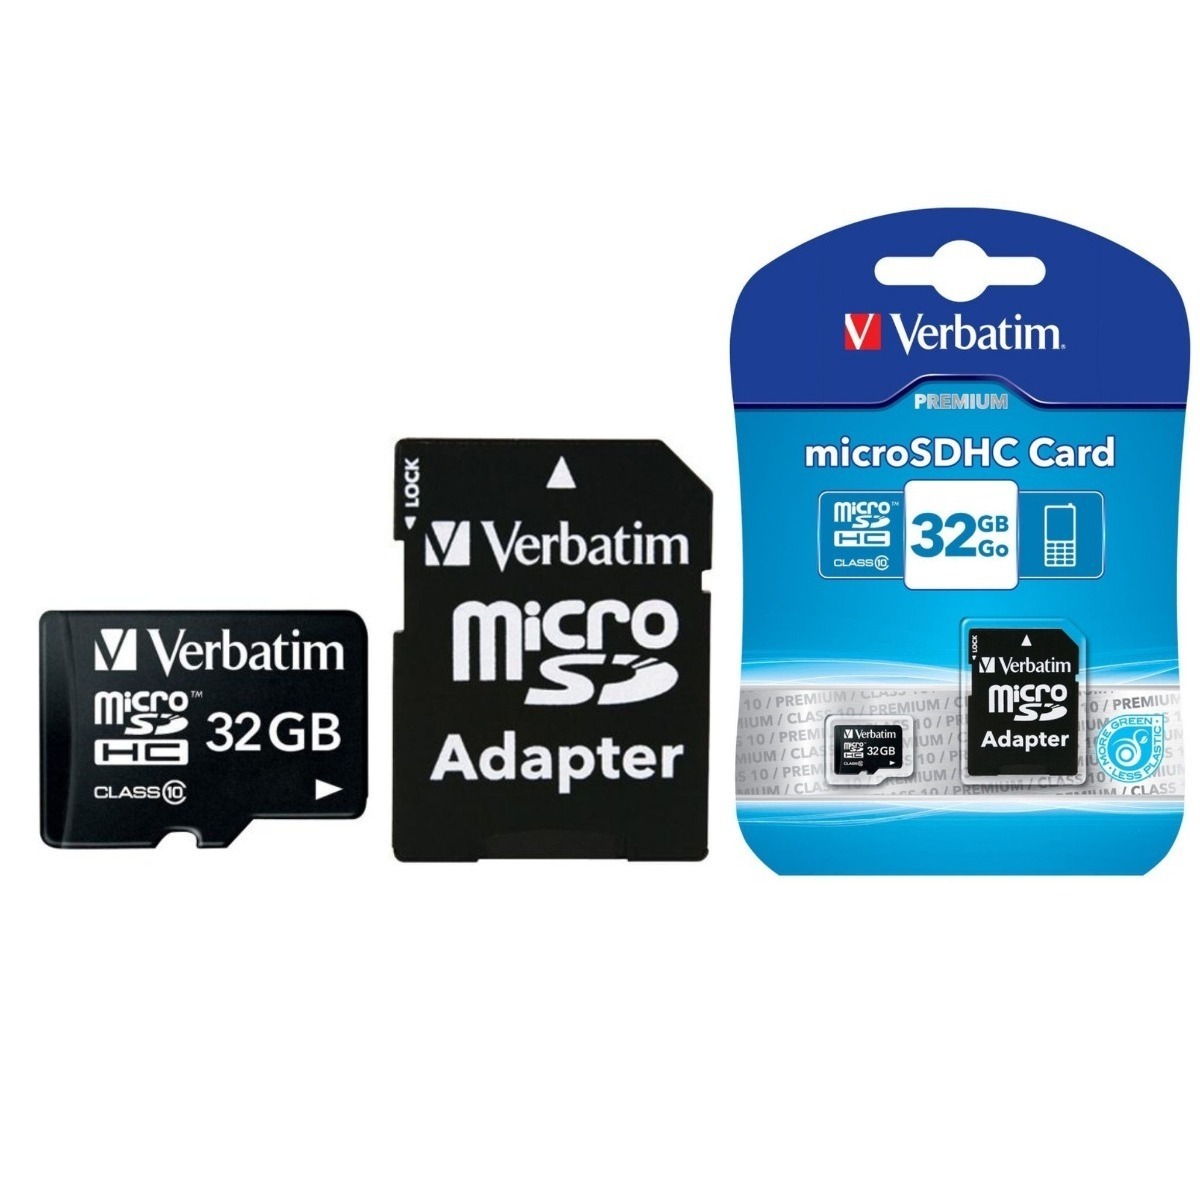 Memoria Micro SD 32 GB TM Clase 10